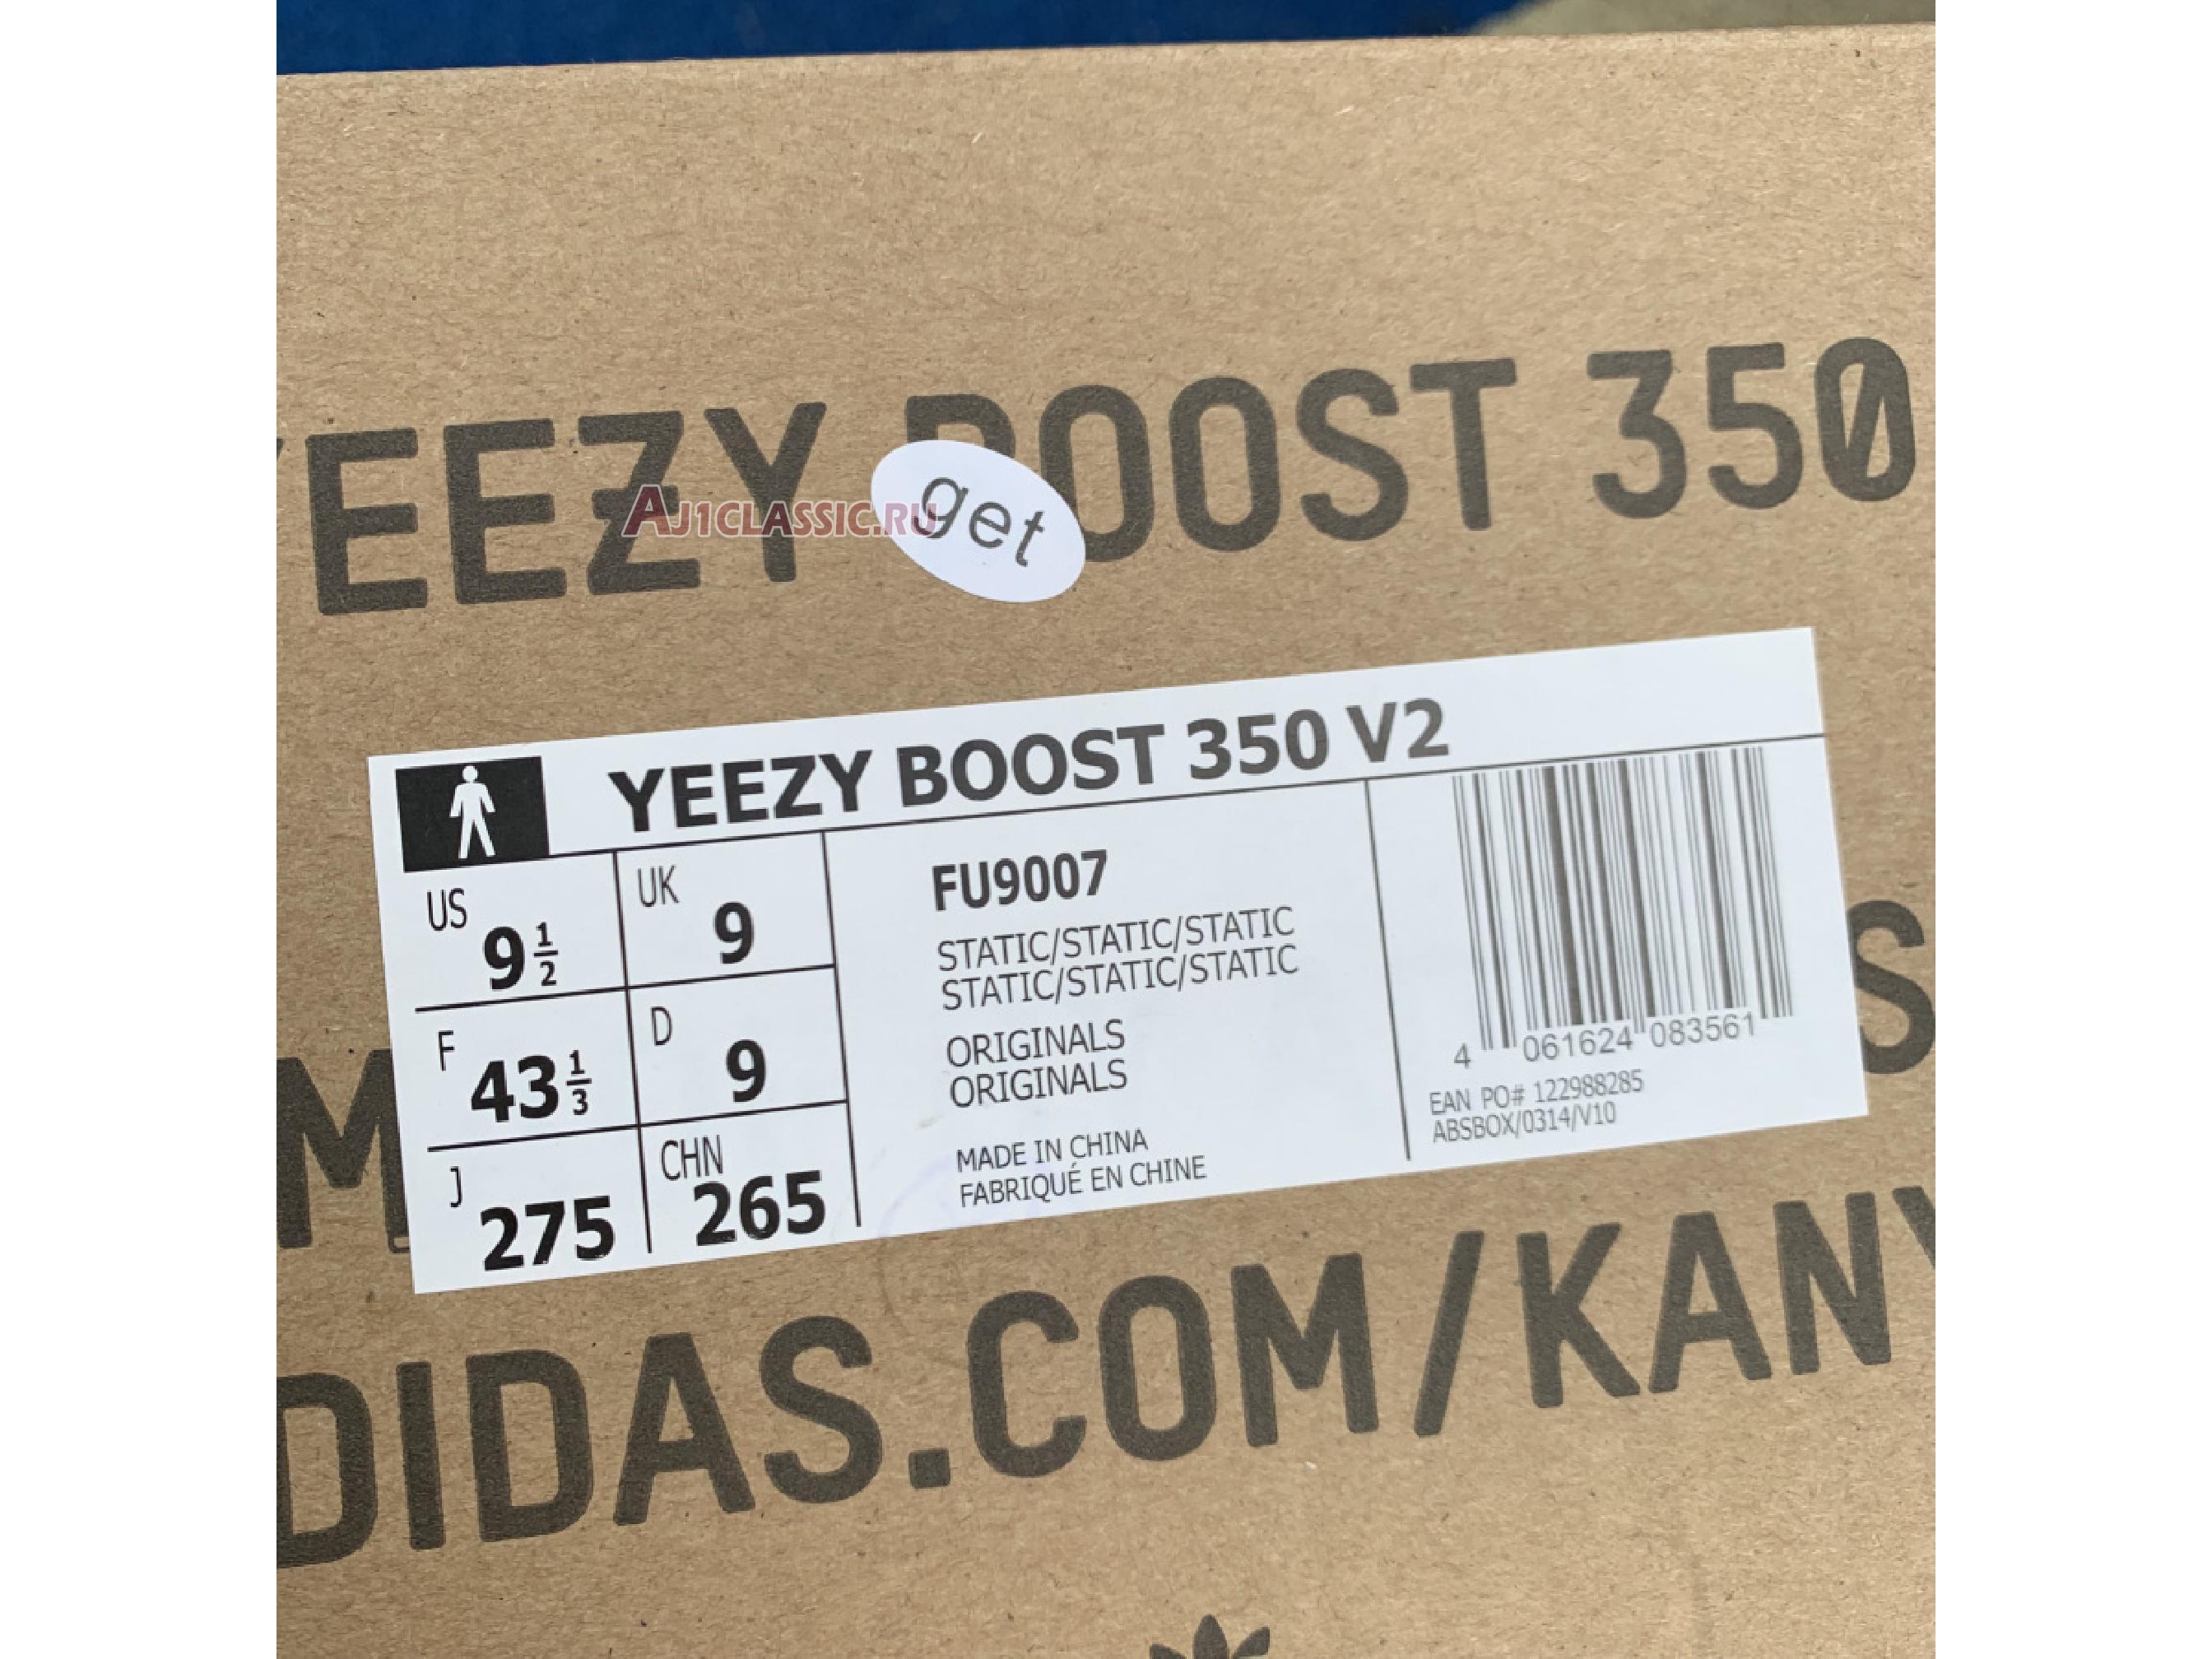 Adidas Yeezy Boost 350 V2 "Black Reflective" FU9007